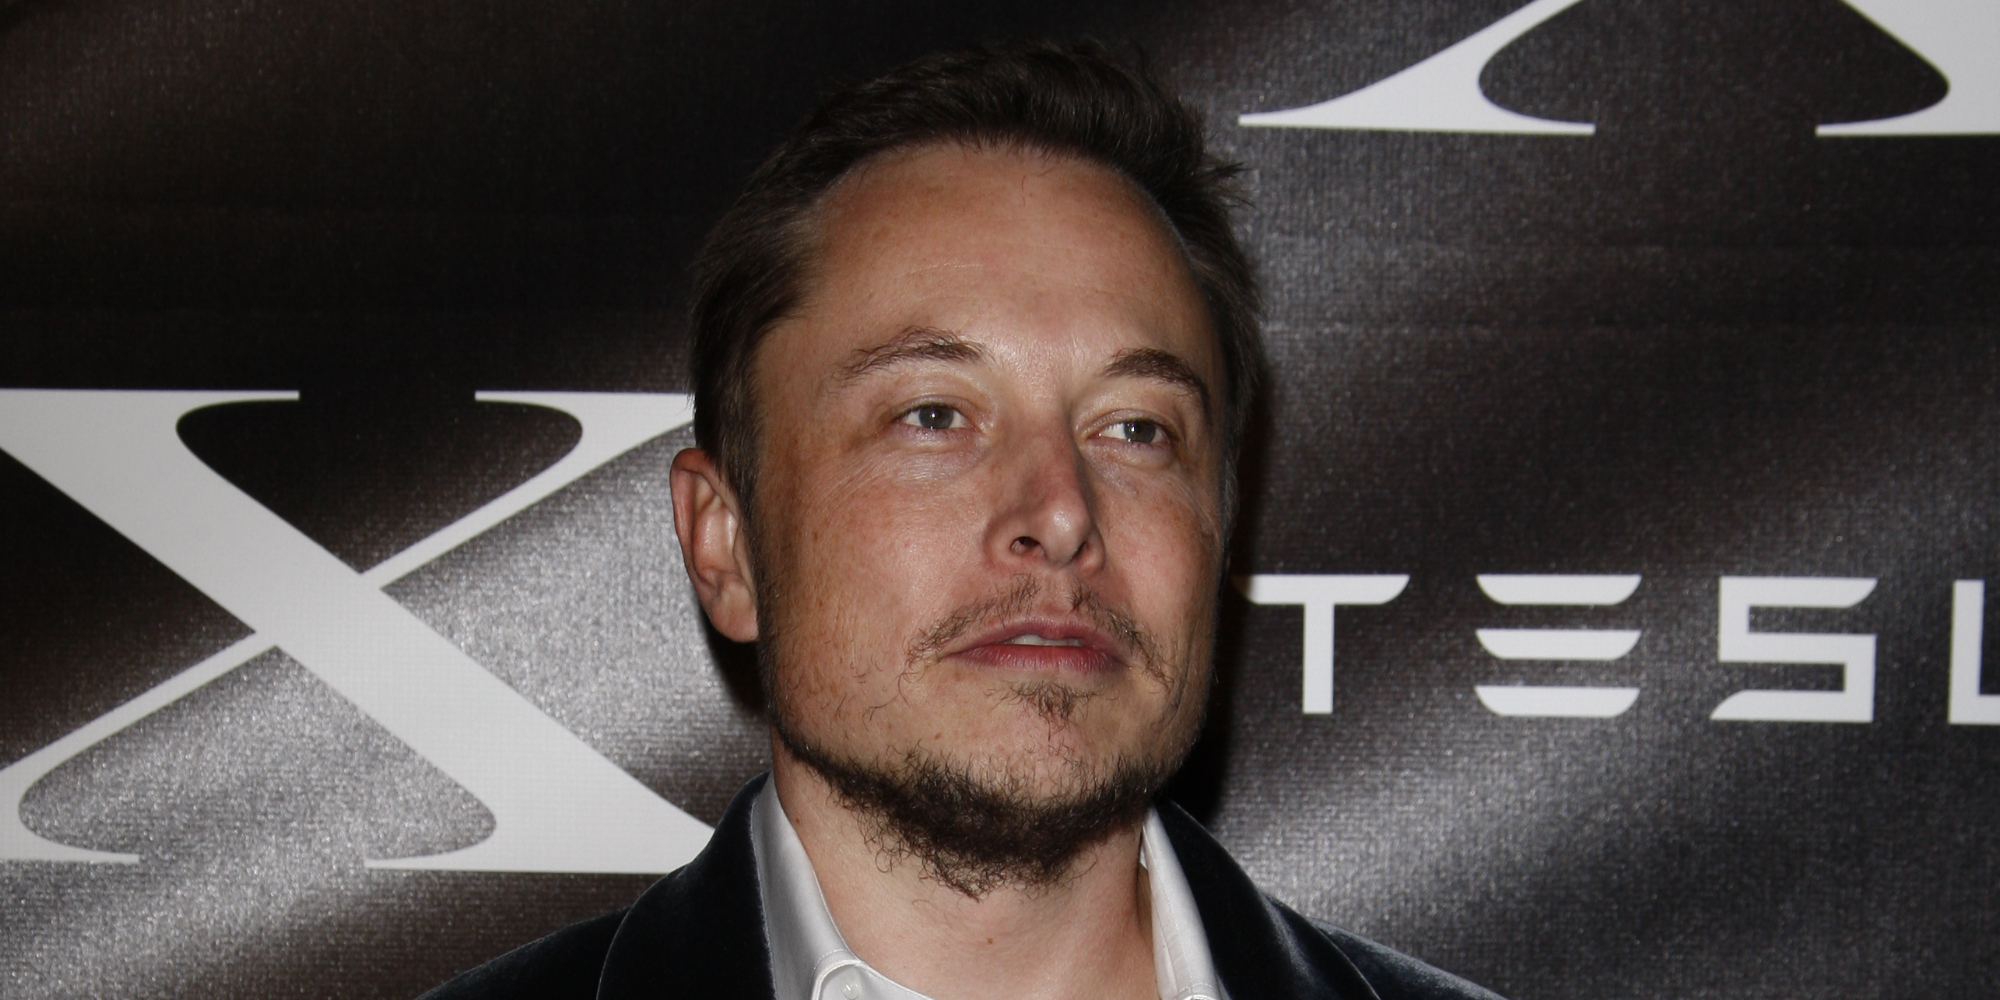 Elon Musk is having an anti-lockdown meltdown on Twitter